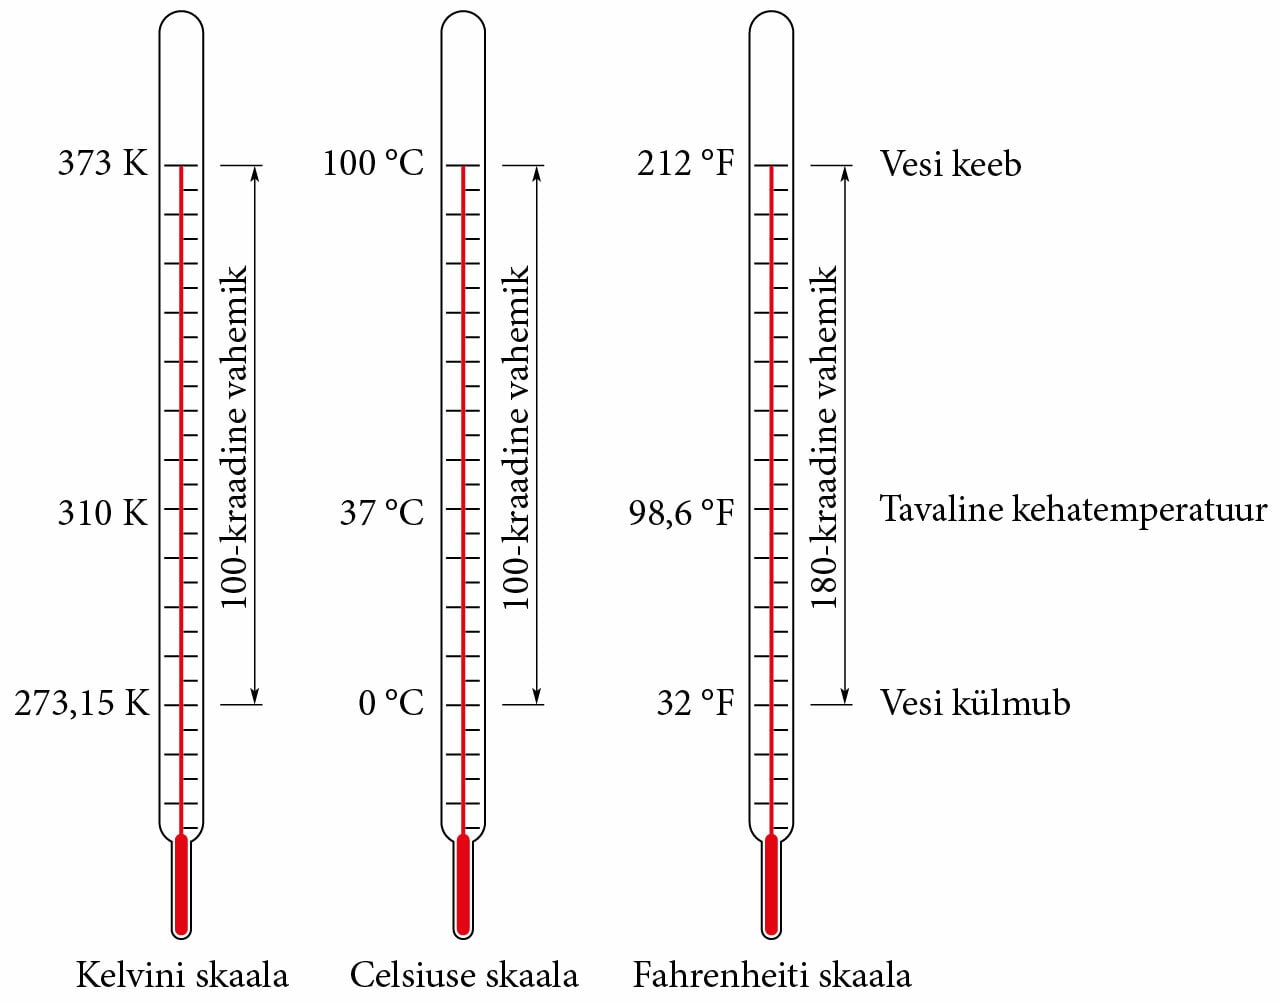 Comparison of temperature scales